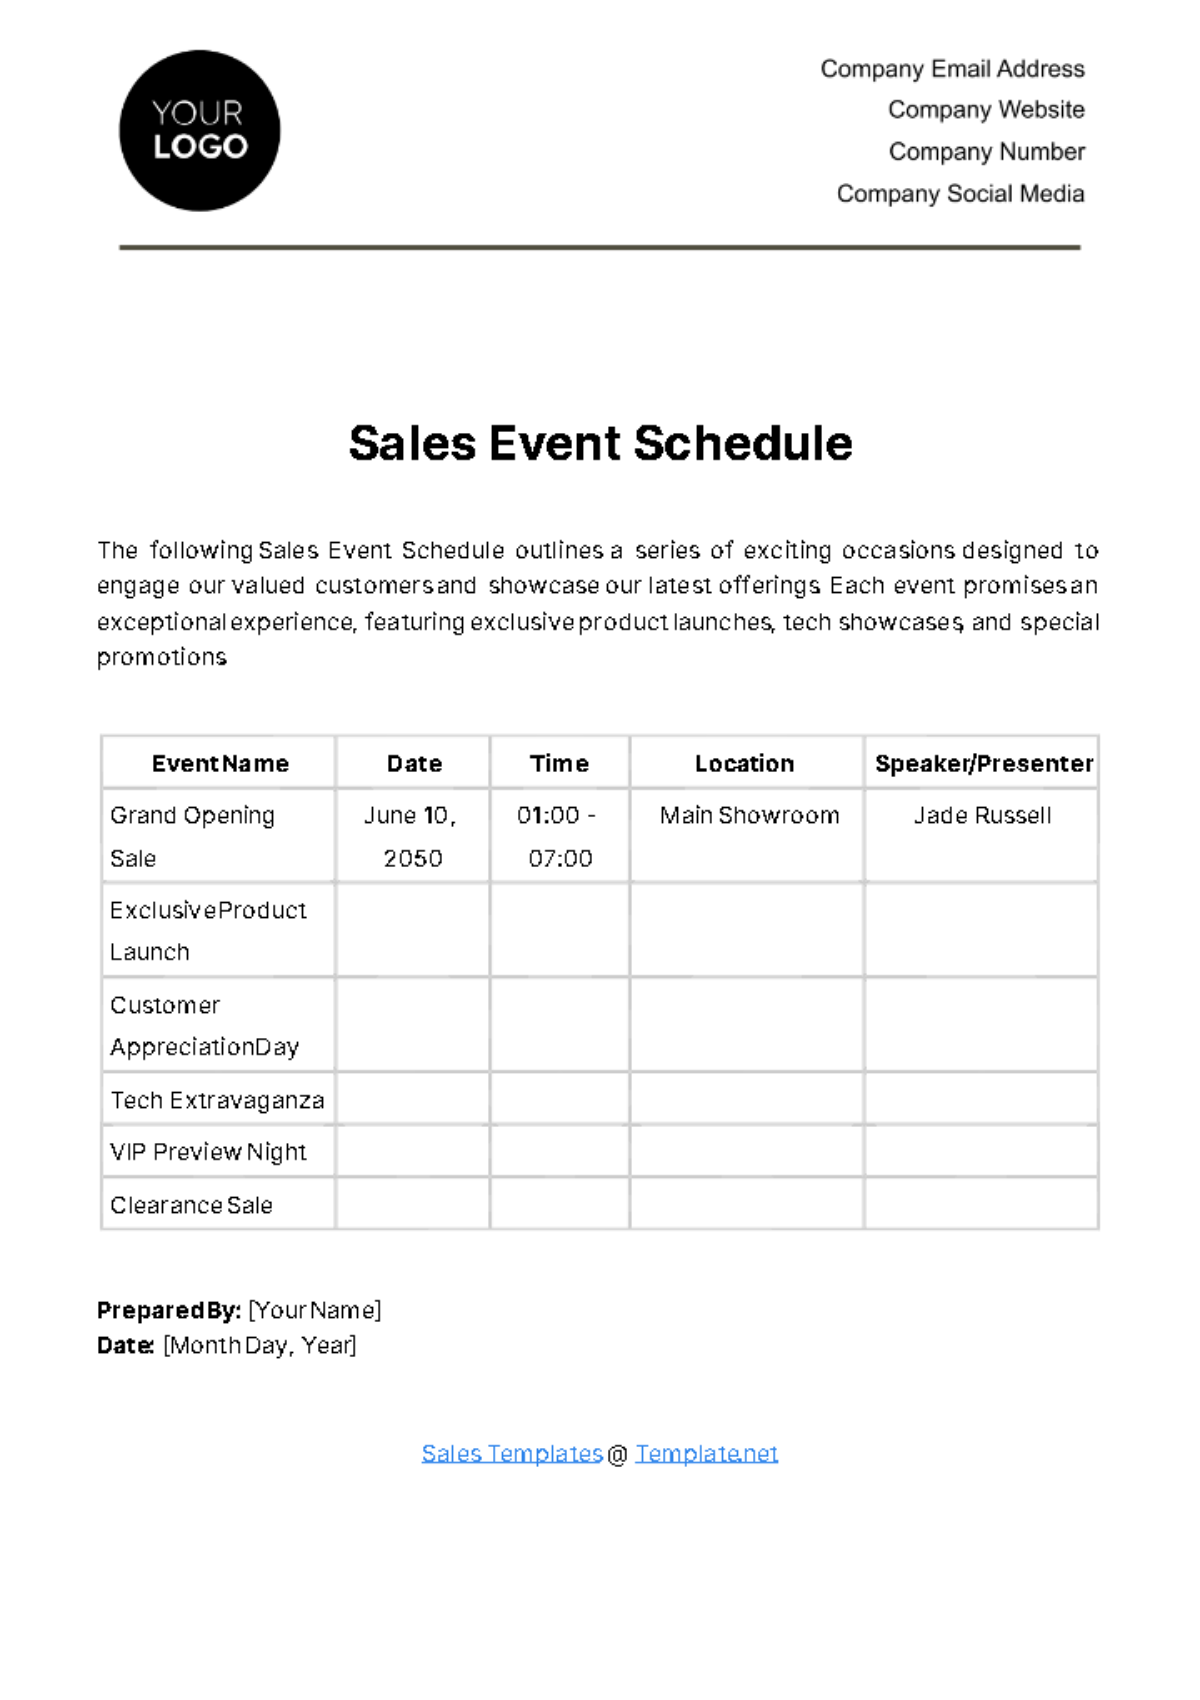 Sales Event Schedule Template